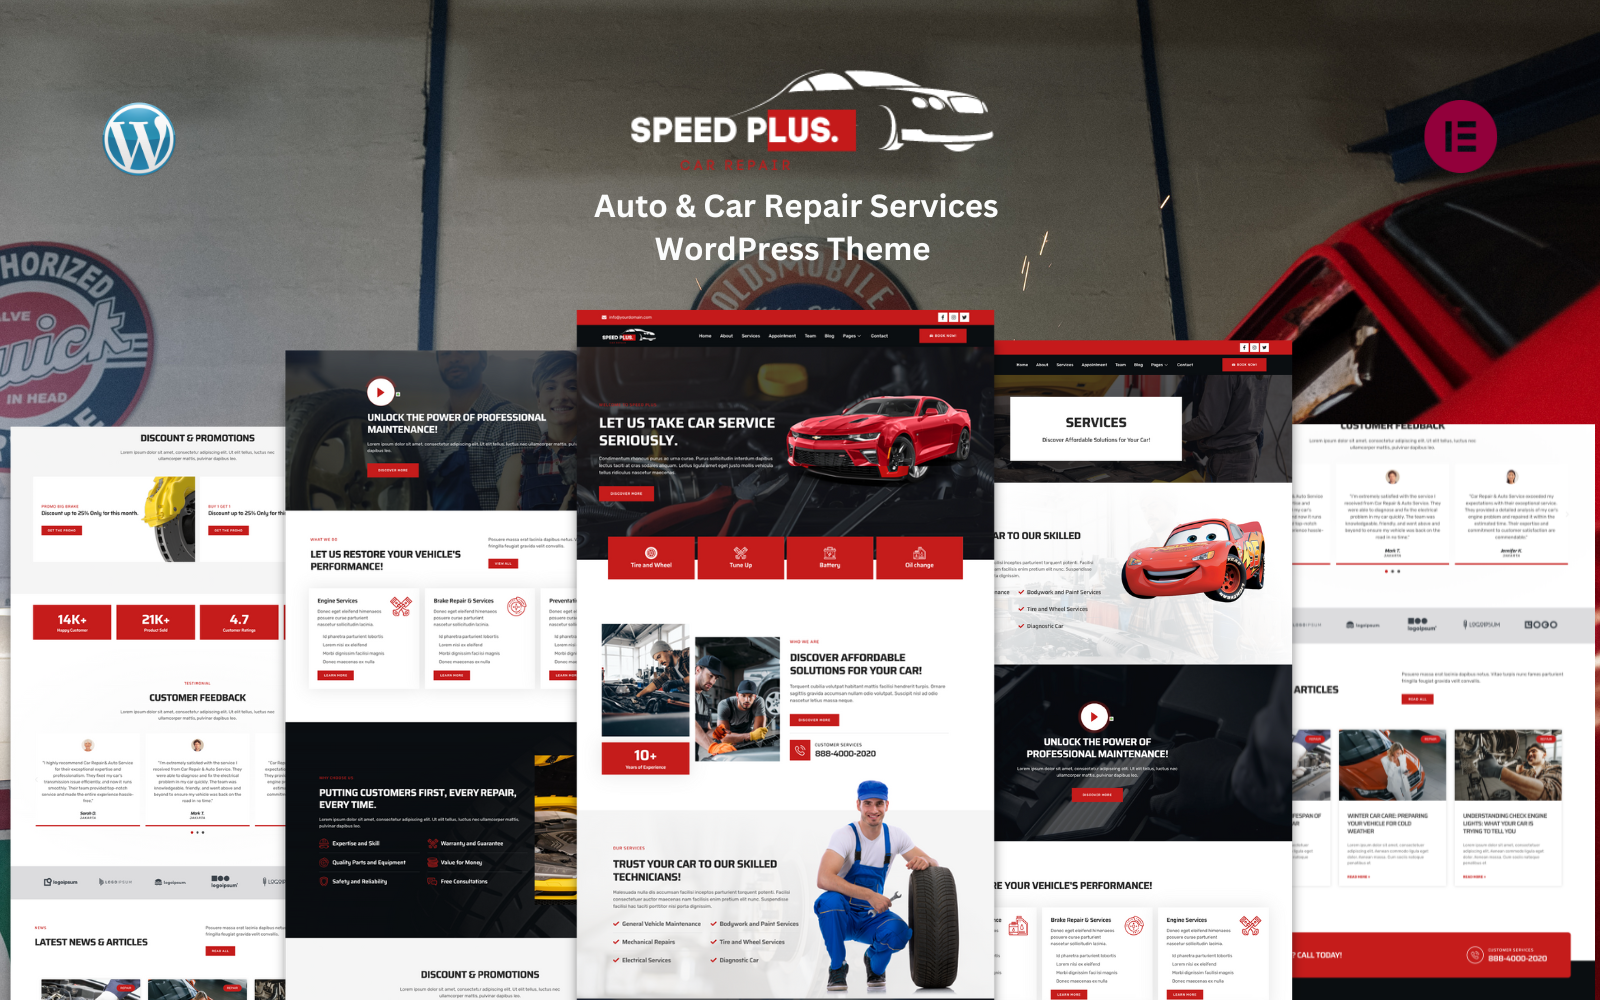 Speed Plus - Auto & Car Repair Services WordPress Theme